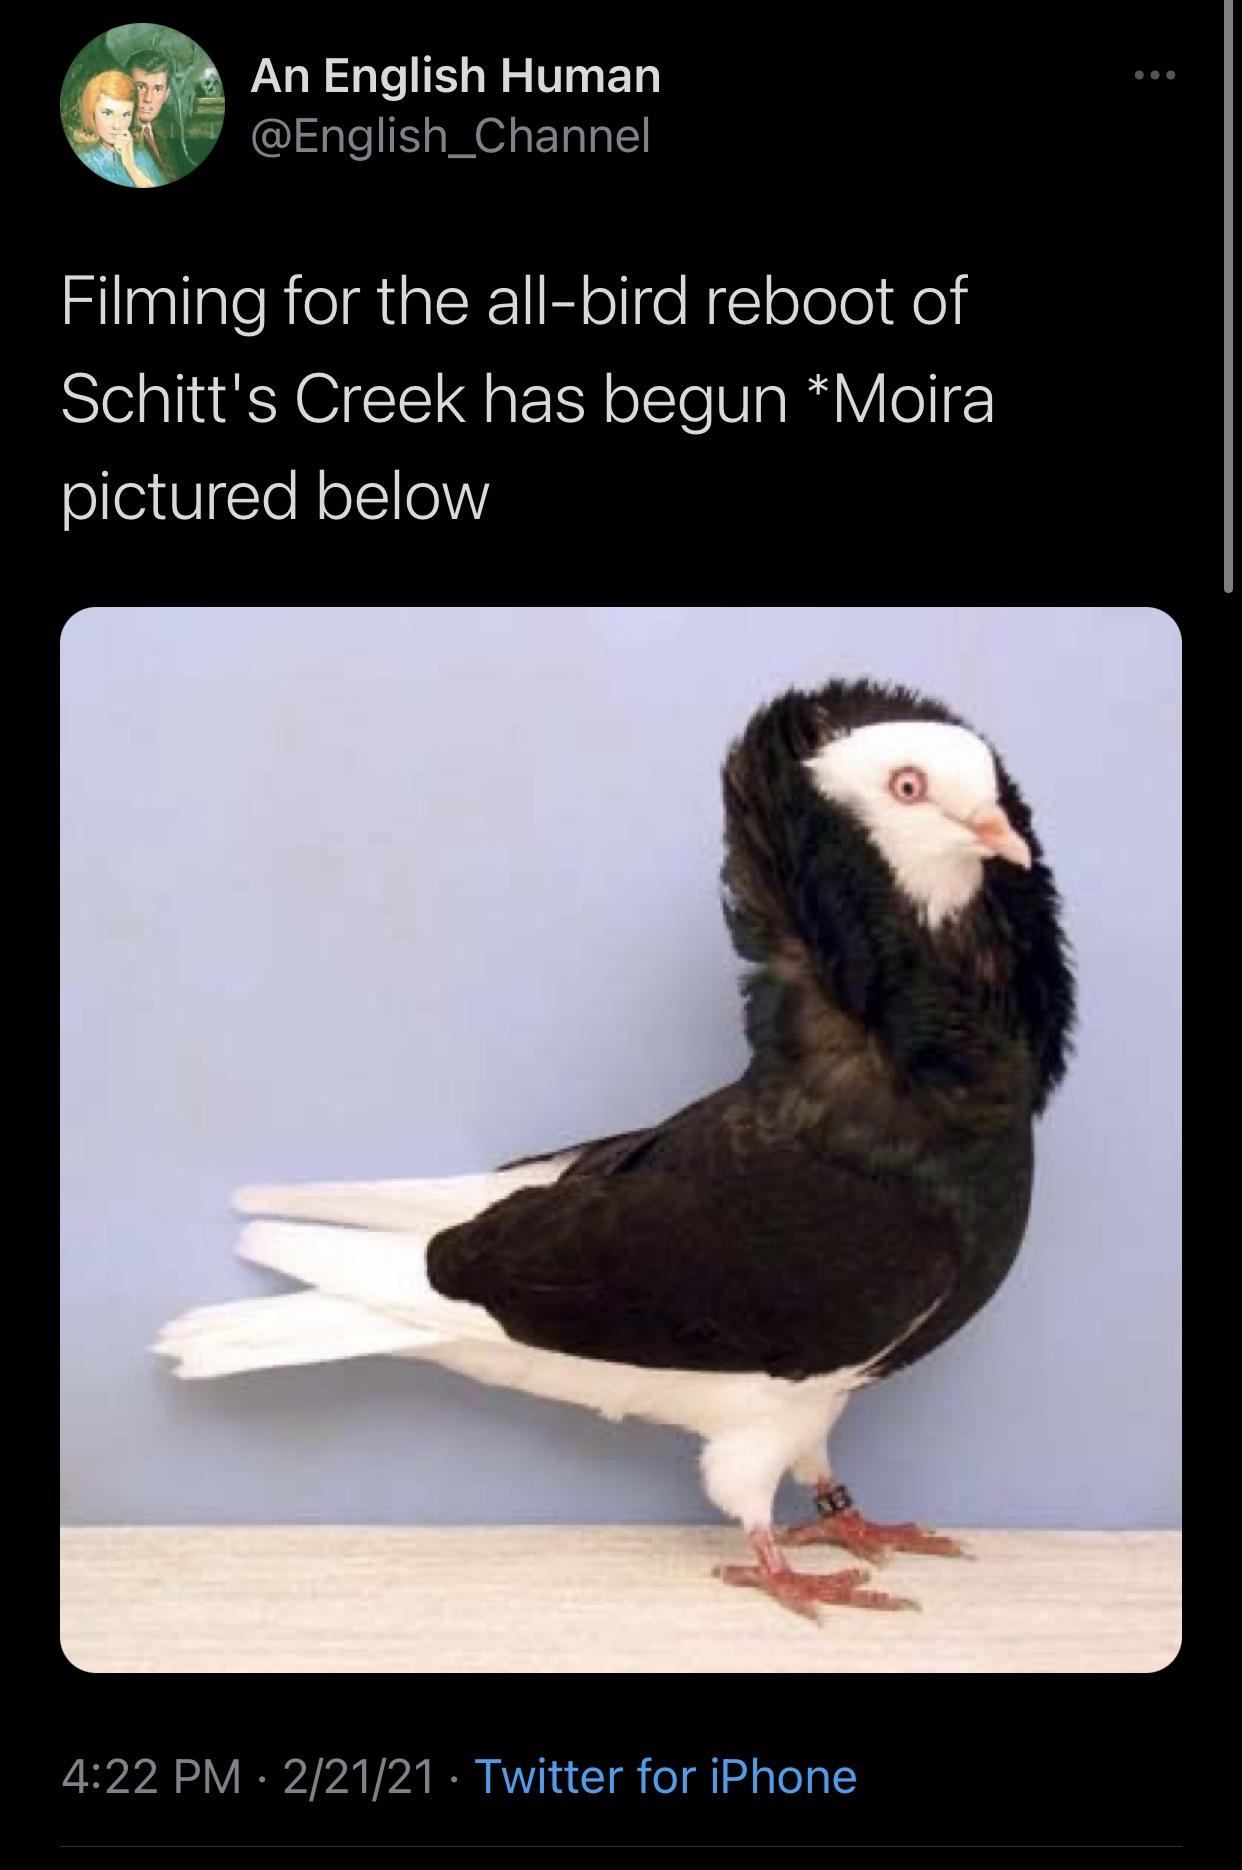 old dutch capuchine pigeon - An English Human ex Filming for the allbird reboot of Schitt's Creek has begun Moira pictured below 22121 Twitter for iPhone